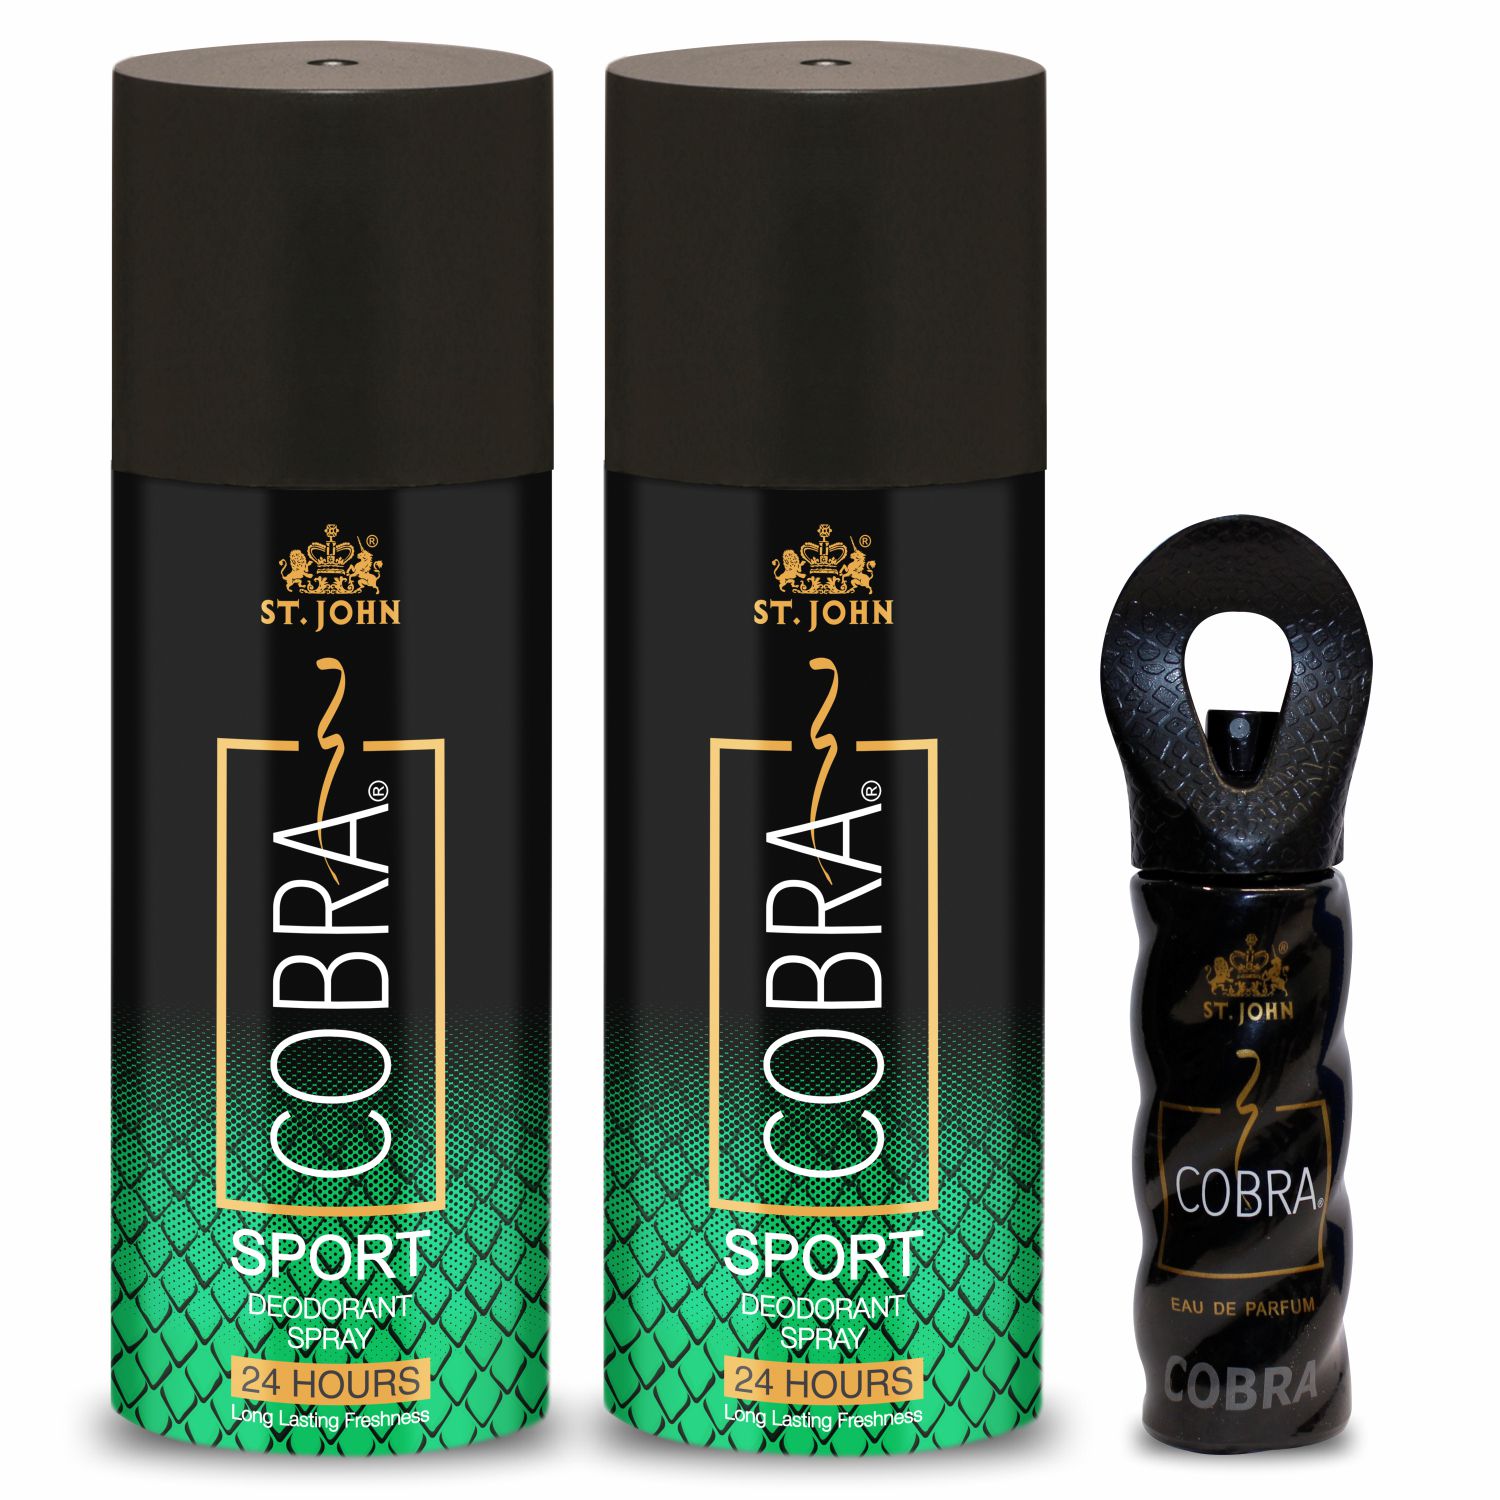     			St. John - Cobra Deo Cool & 15ml Perfume Pack of 3 Deodorant Spray & Perfume for Unisex 150 ml ( Pack of 3 )